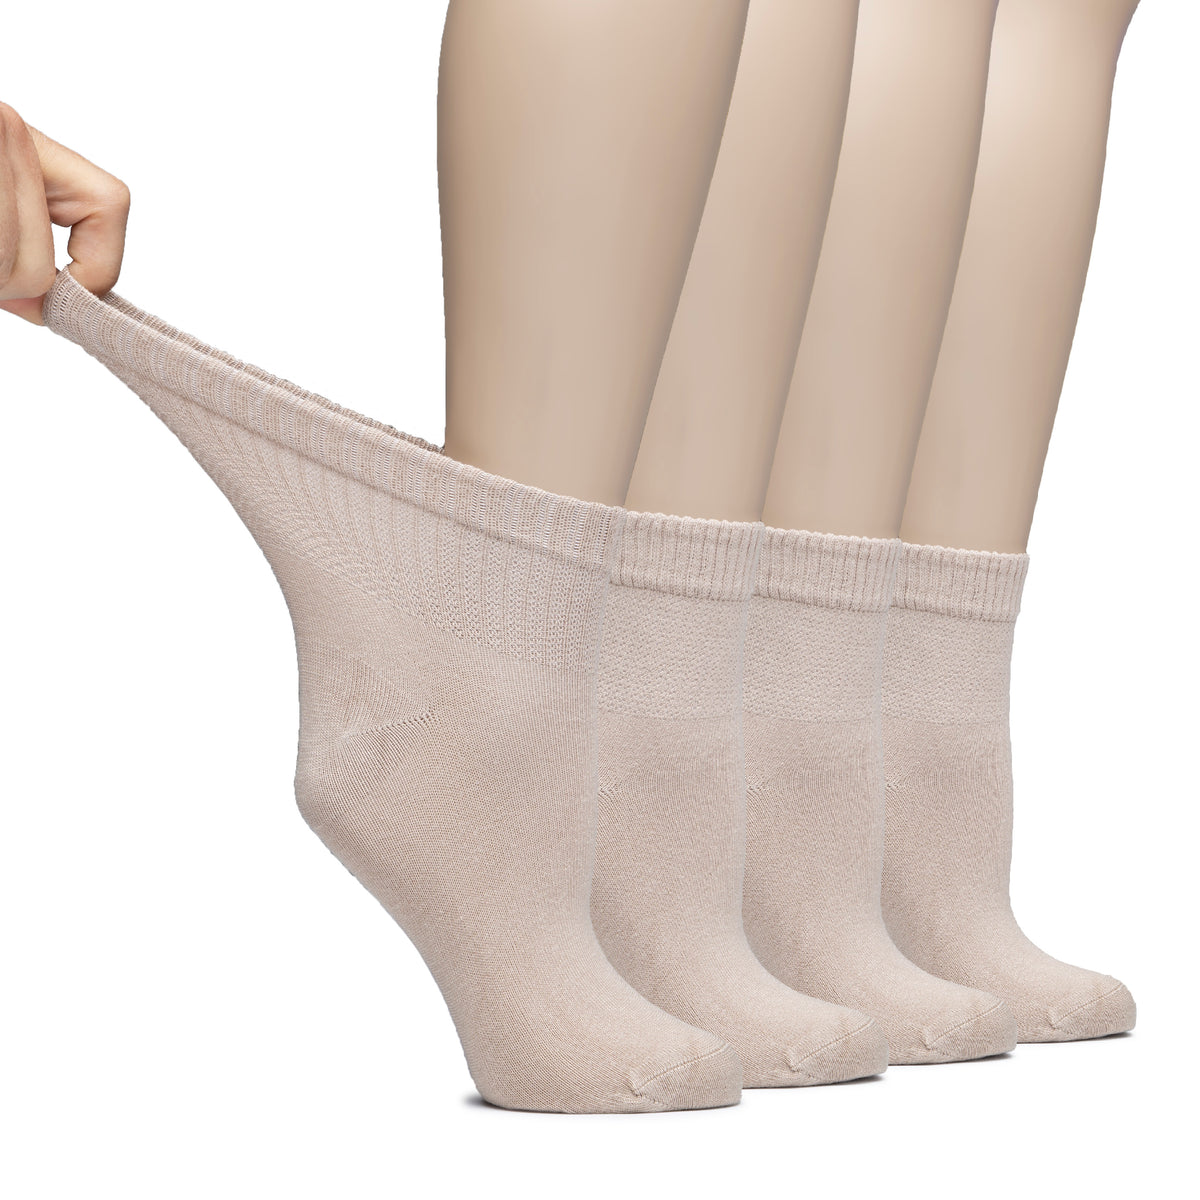 Hugh Ugoli Lightweight Women's Diabetic Ankle Socks Bamboo Thin Socks Seamless Toe and Non-Binding Top, 4 Pairs, , Shoe Size: 6-9/10-12 | Shoe Size: 6-9 | Purplish Gray